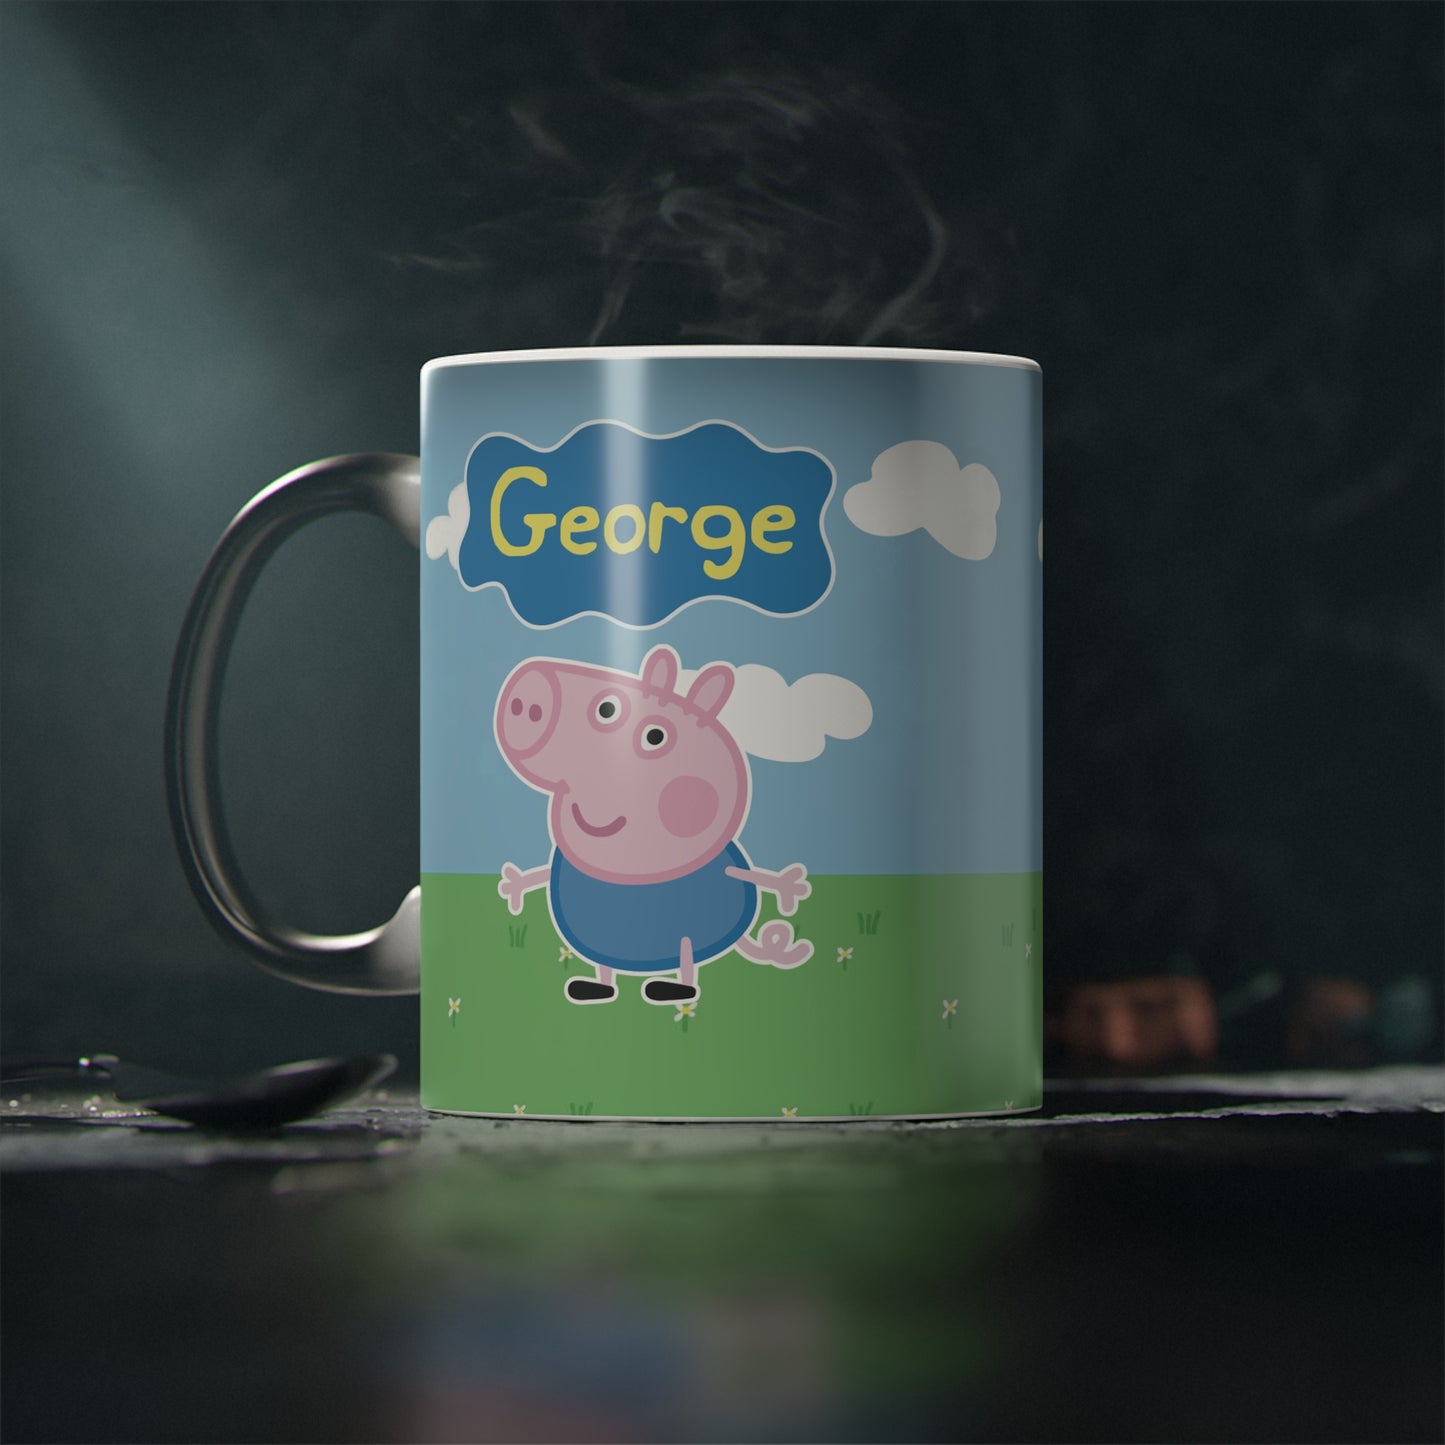 George Peppa Pig Gift Kit Loving Plush Toy + Personalized Magic Mug